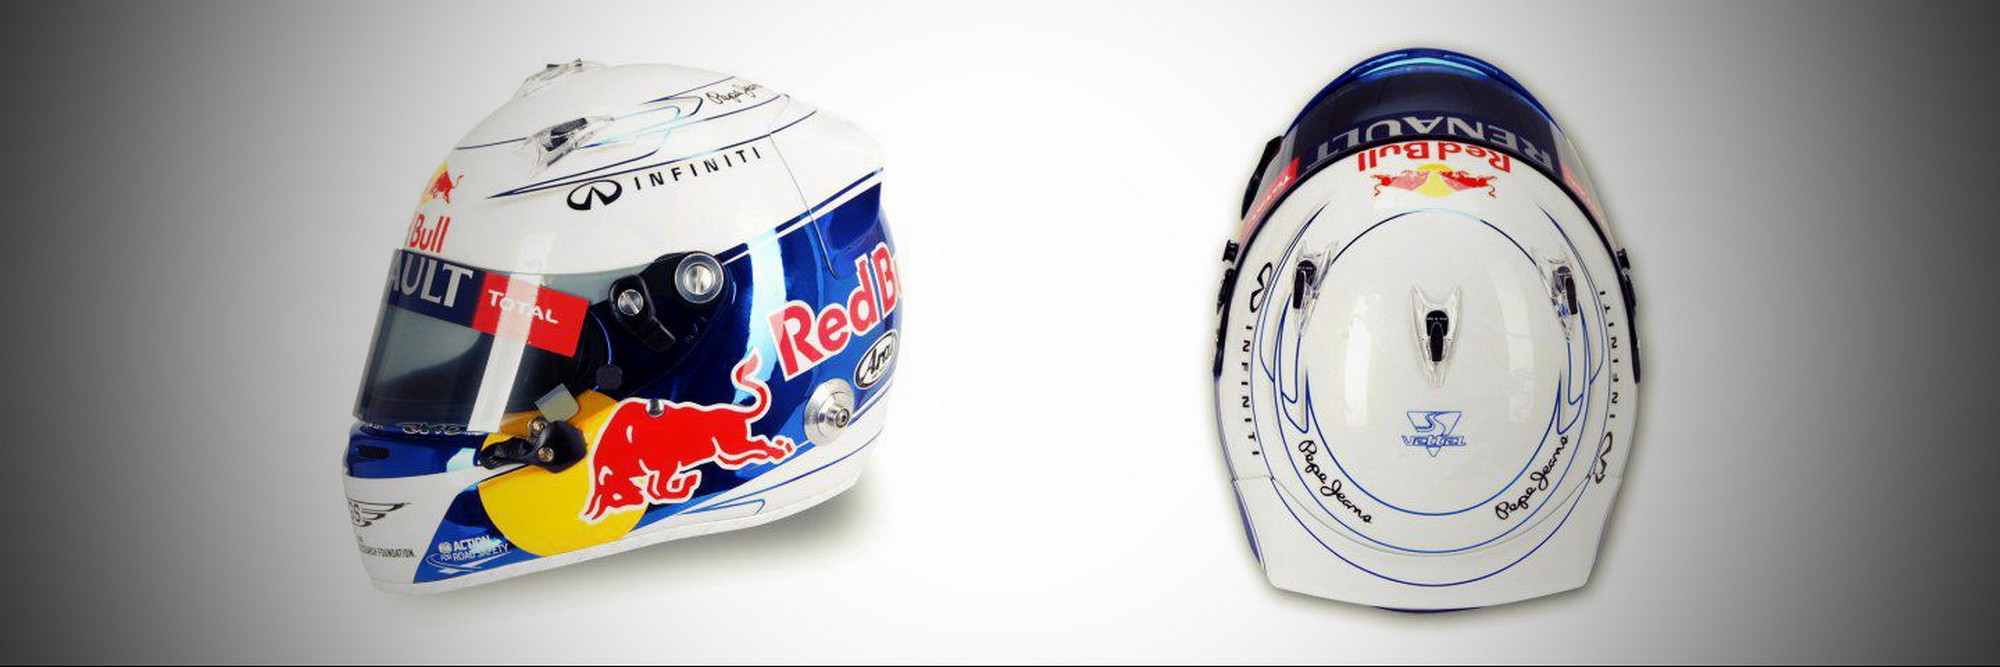 Шлем Себастьяна Феттеля на Гран-При Испании 2012 | 2012 Spanish Grand Prix helmet of Sebastian Vettel